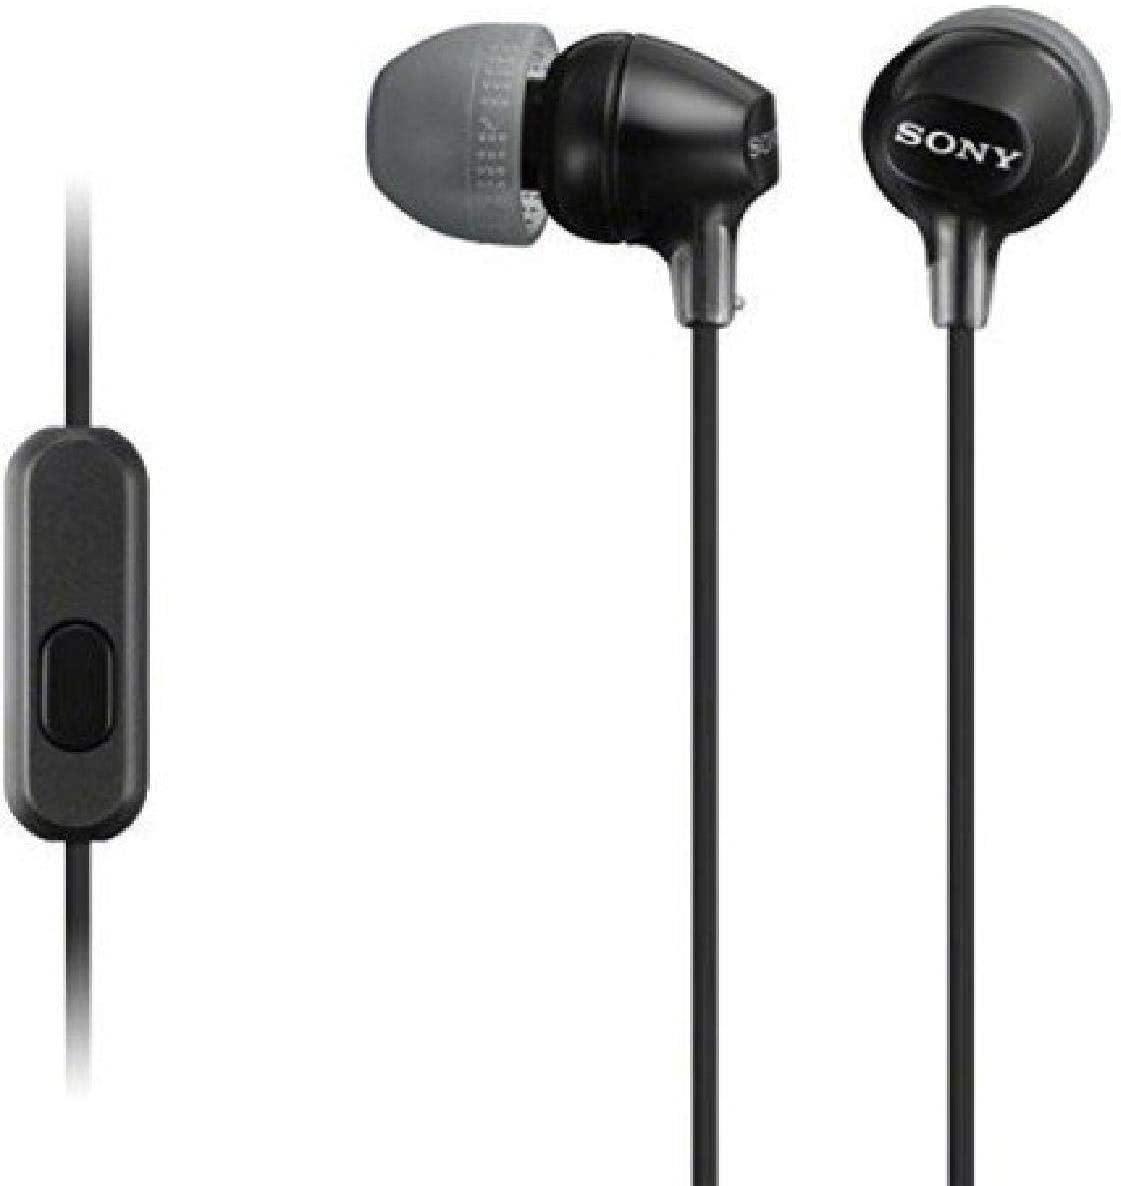 Sony MDR-EX15AP In-Ear Headphones - Black - Local Warranty